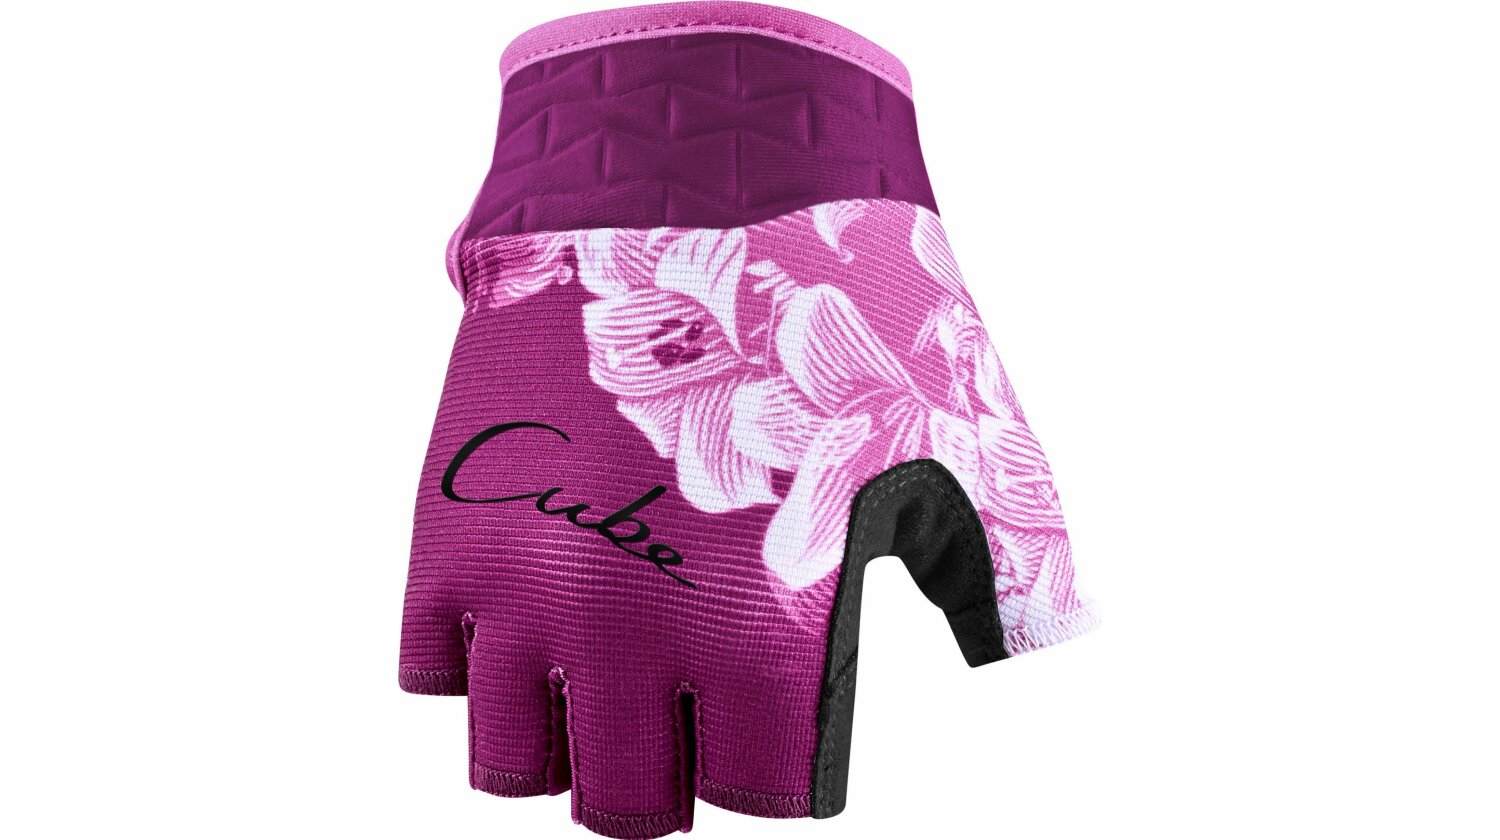 Cube Performance Junior Handschuhe kurz pink